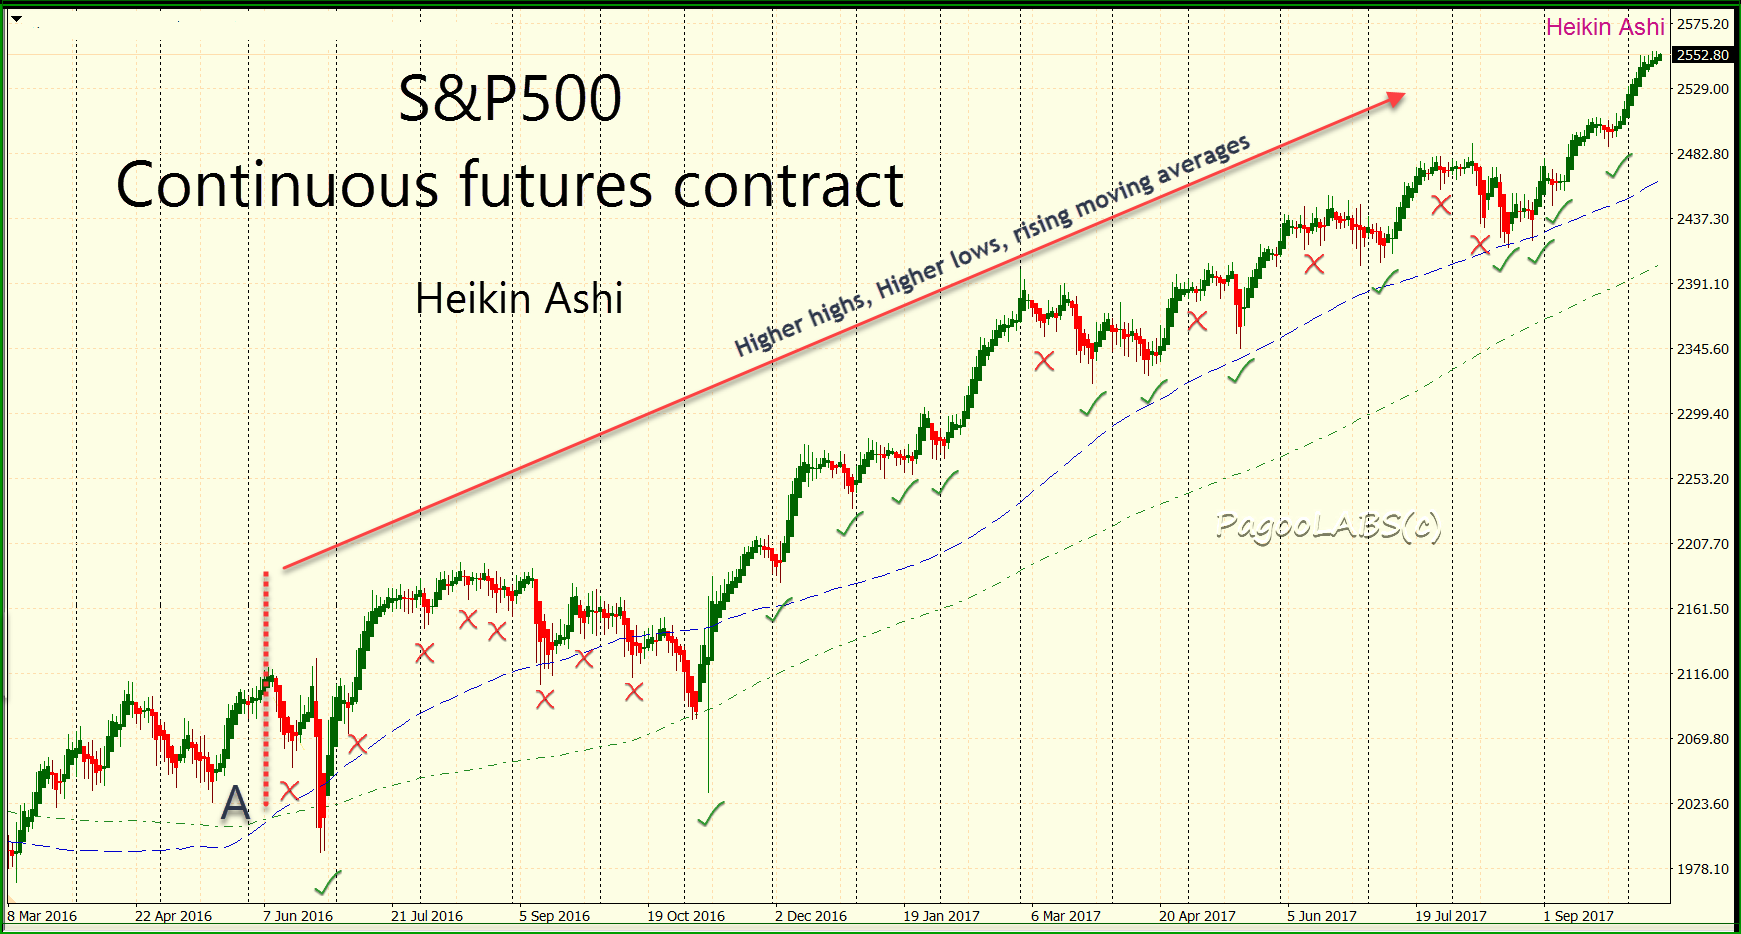 Heikin Ashi chart of S&P500